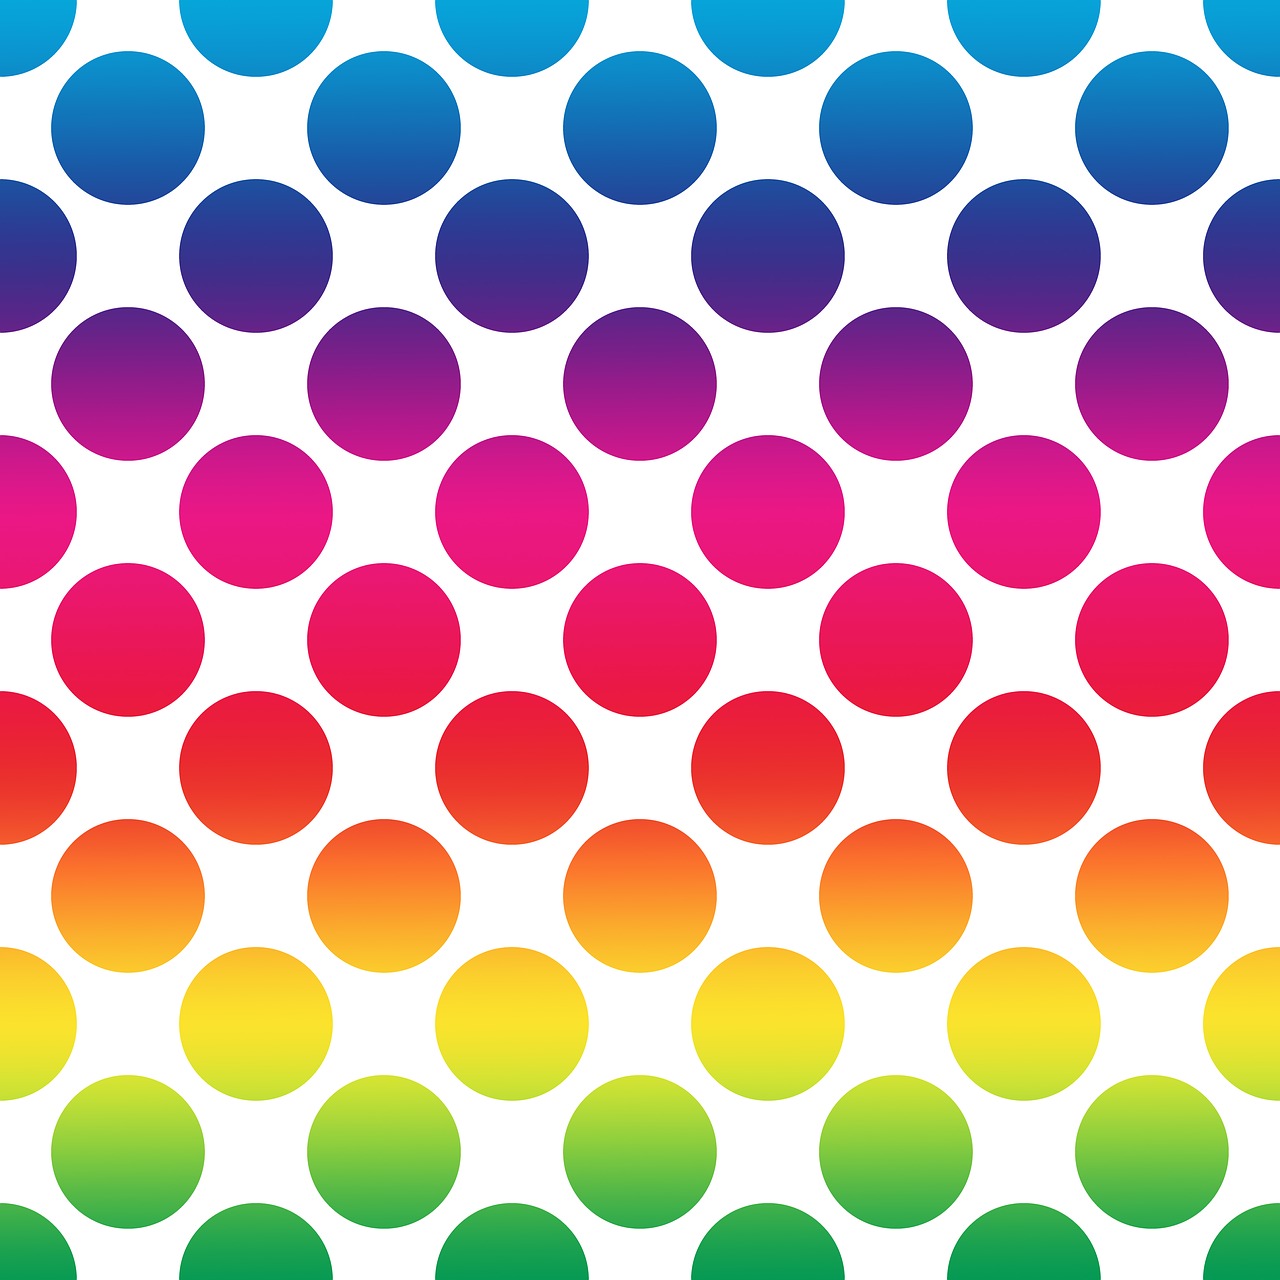 polka dots spectrum colours free photo